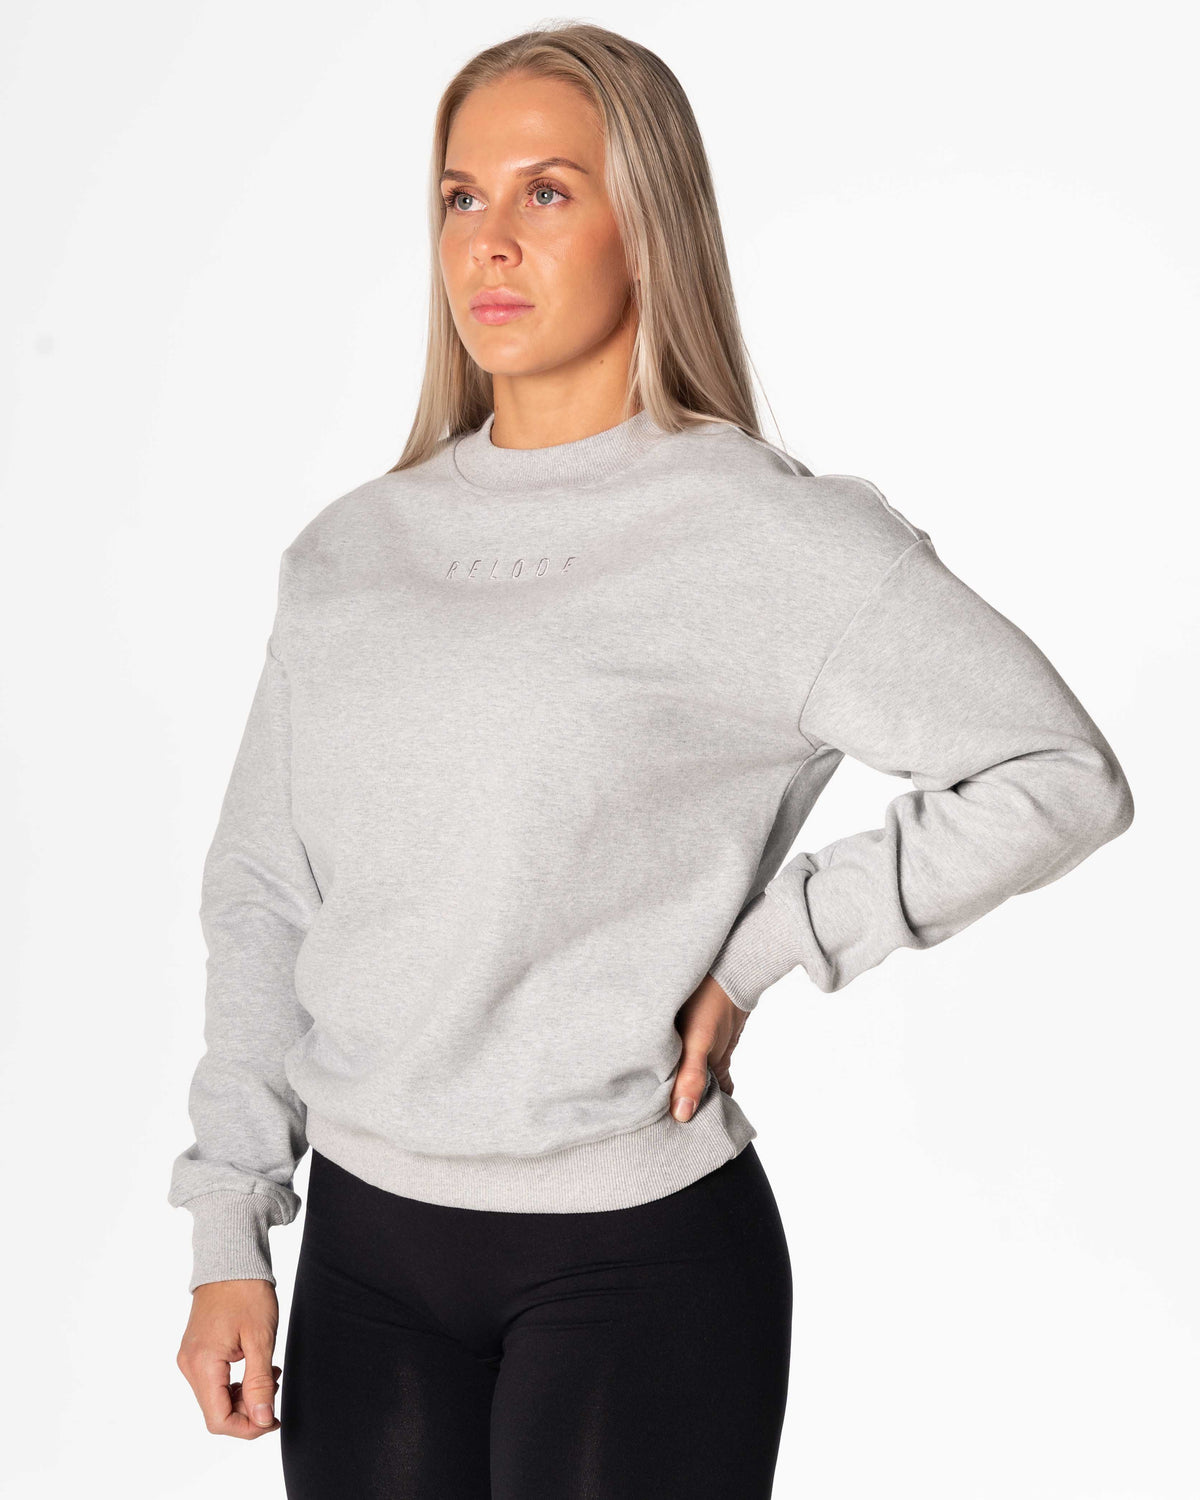 Maverick Women's Sweatshirt - Gray